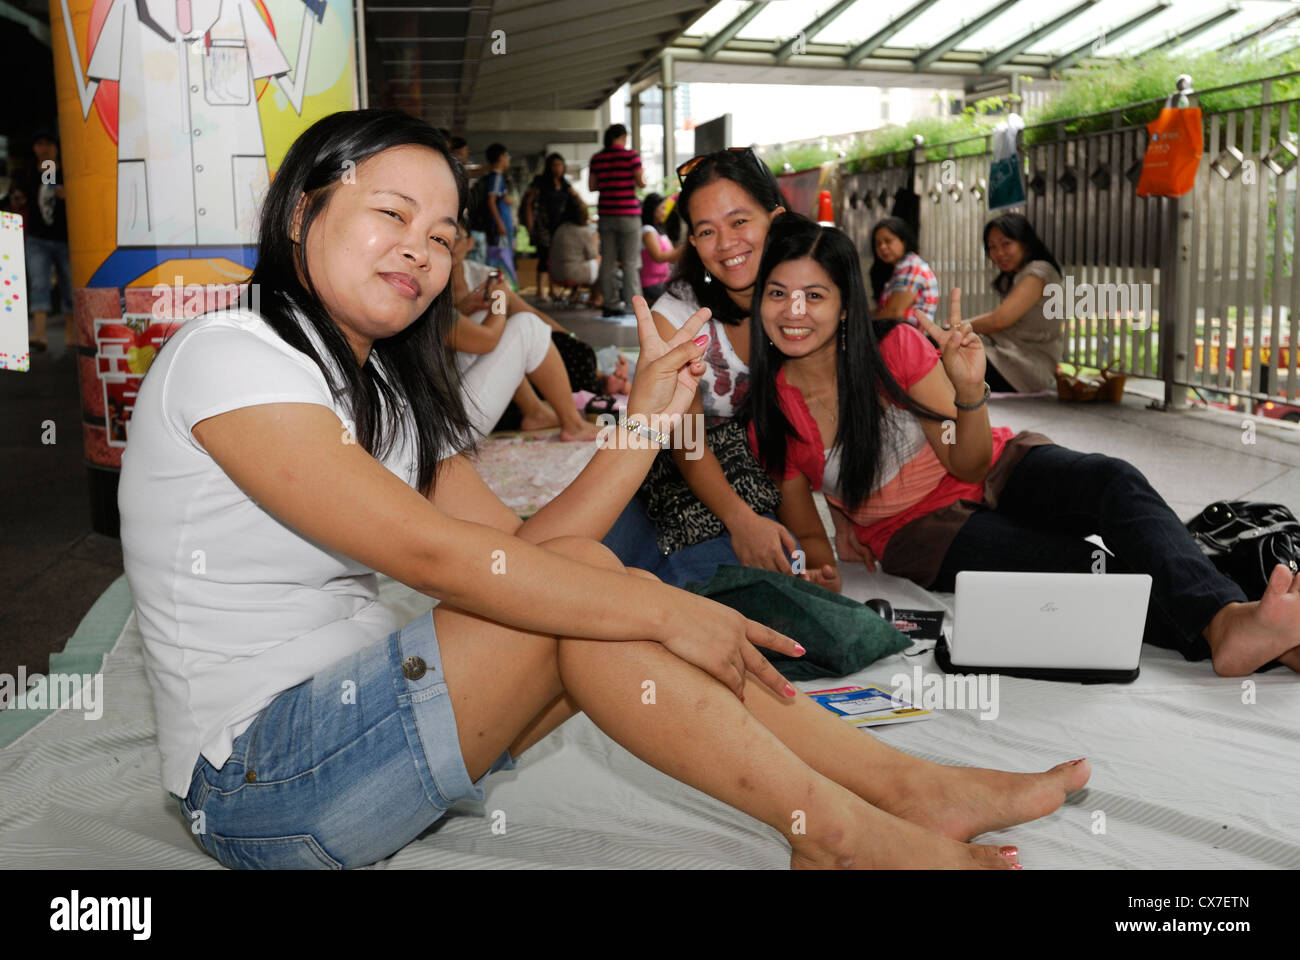 Bambinaie filippino si radunano per le strade di Hong Kong di domenica. Foto Stock